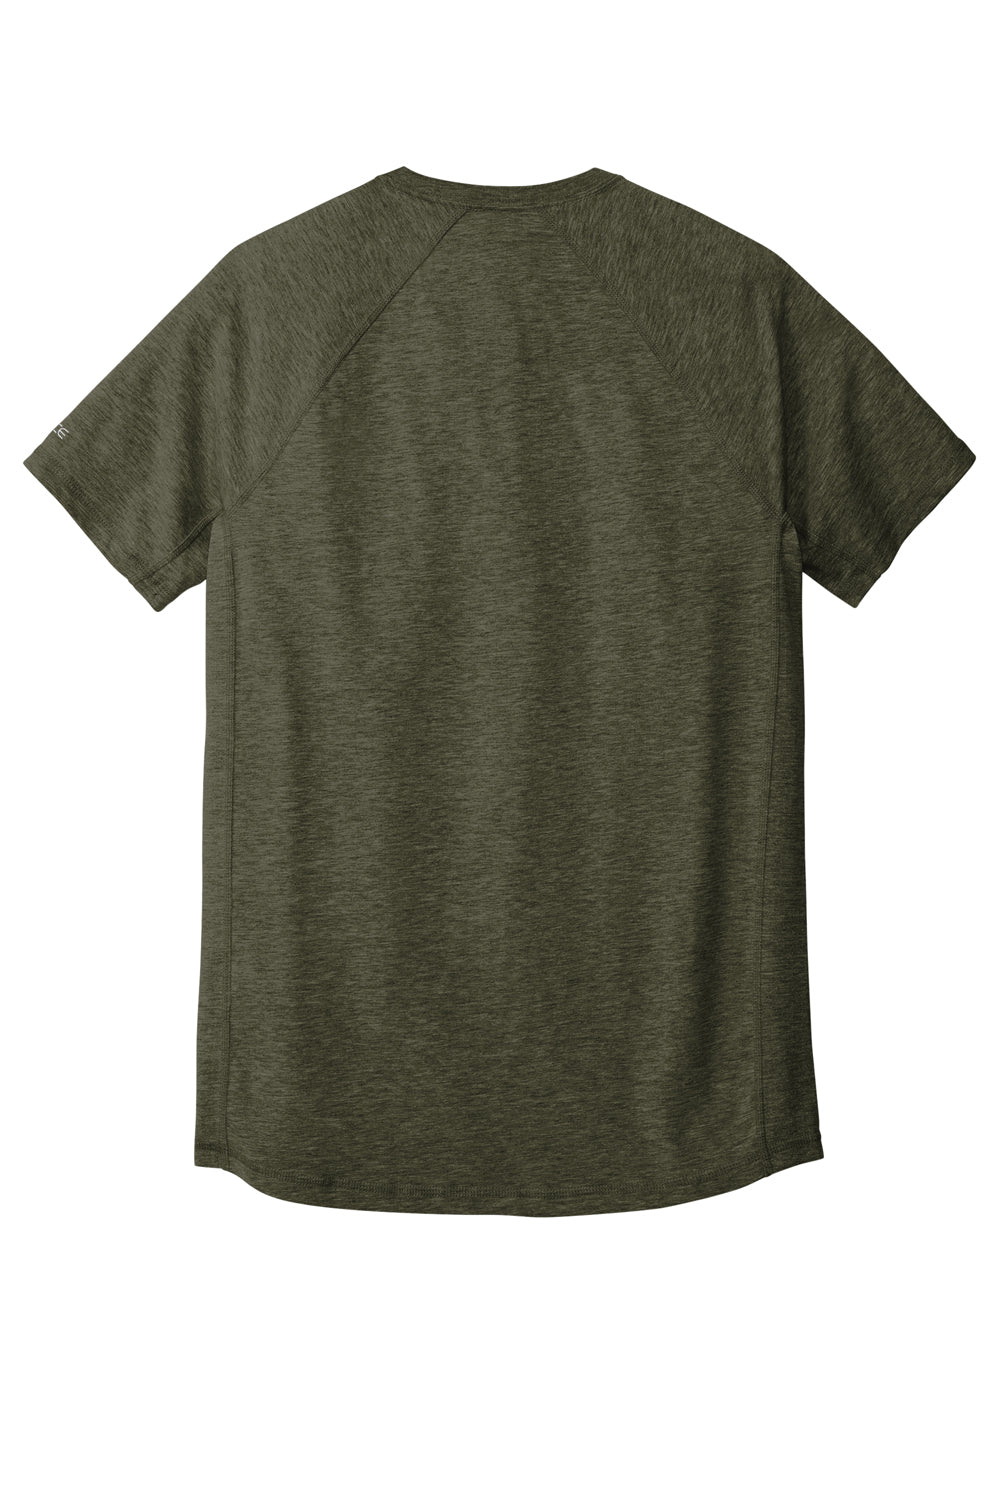 Carhartt CT104616 Mens Force Moisture Wicking Short Sleeve Crewneck T-Shirt w/ Pocket Heather Basil Green Flat Back